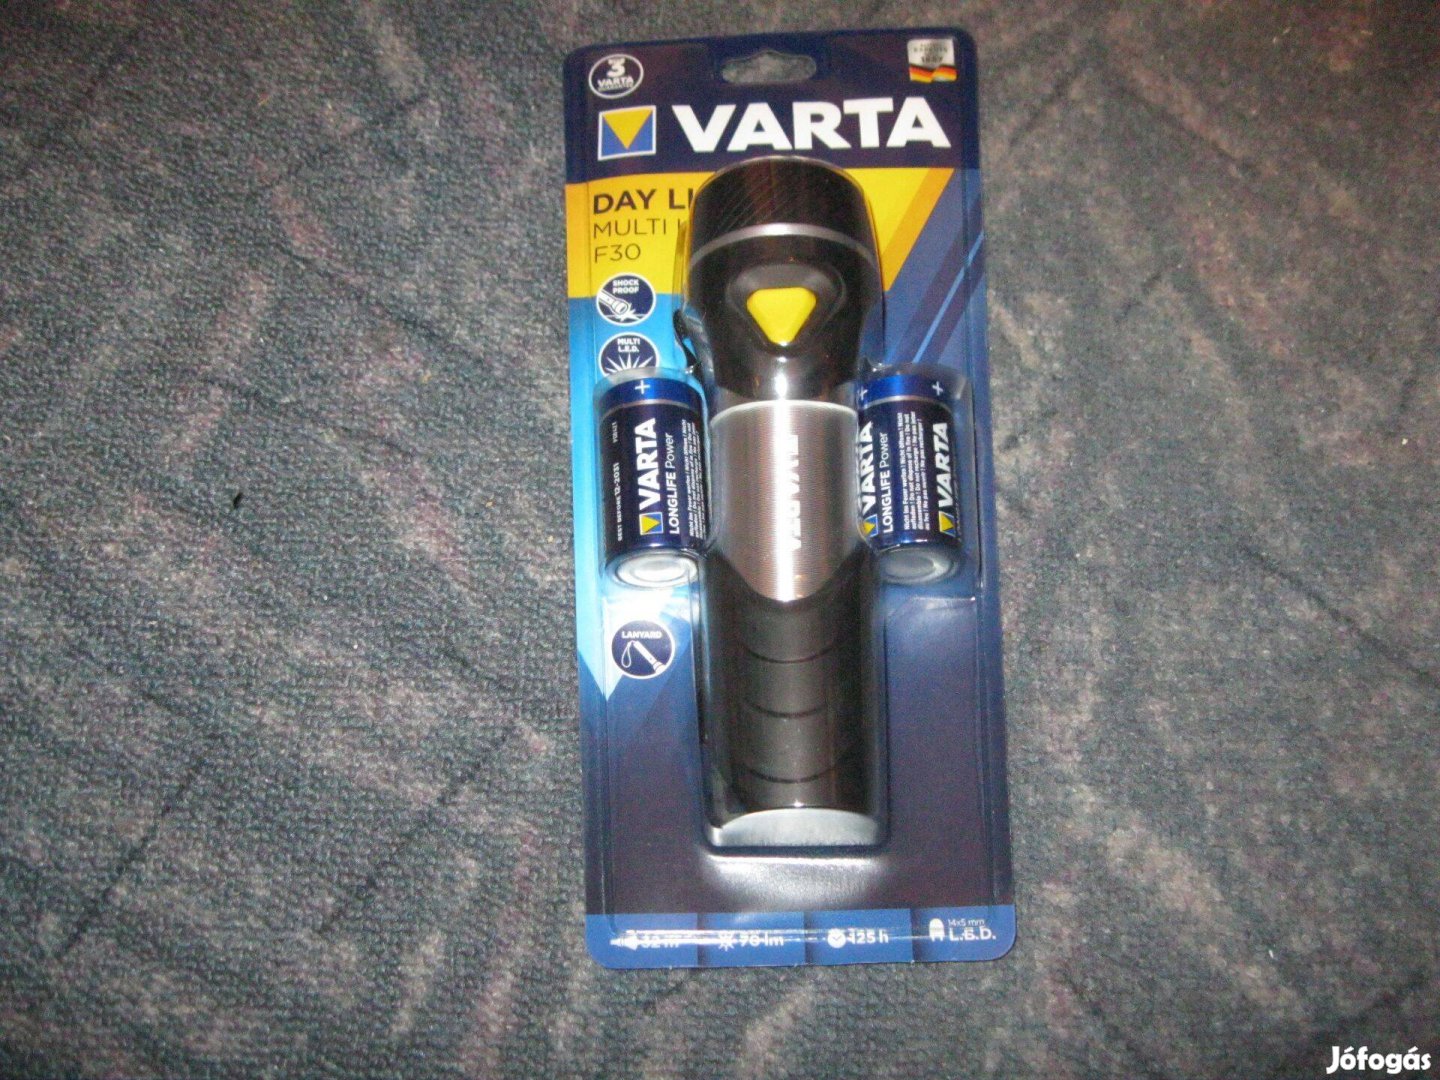 Varta Day Light Multi F30 nagyméretű elemlámpa + 2db góliát elem